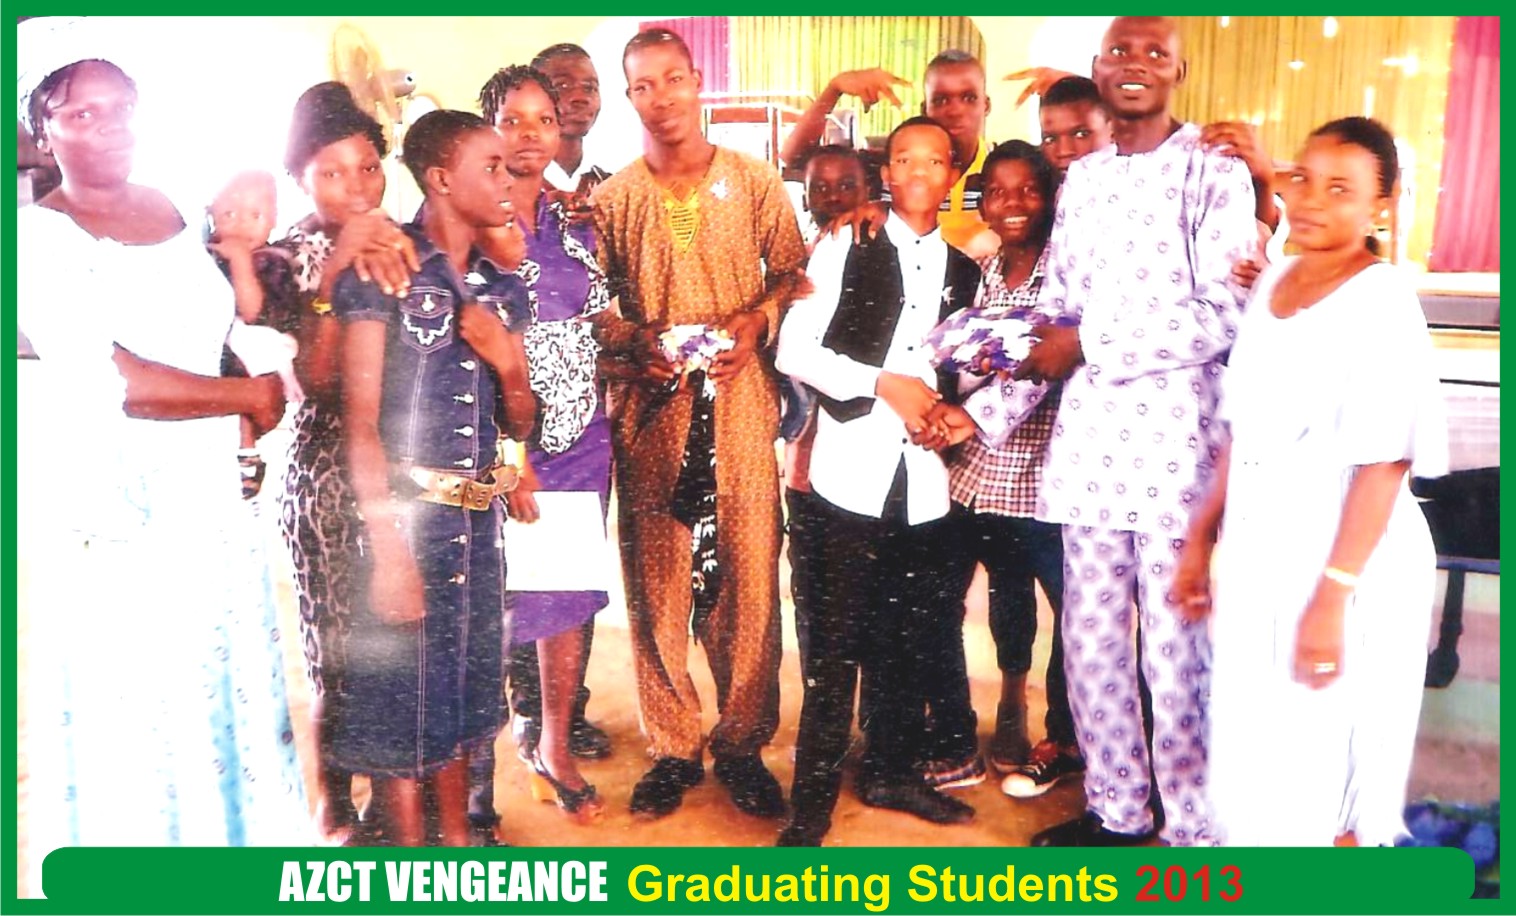 AZCT Vengeance - Graduating Students 2013